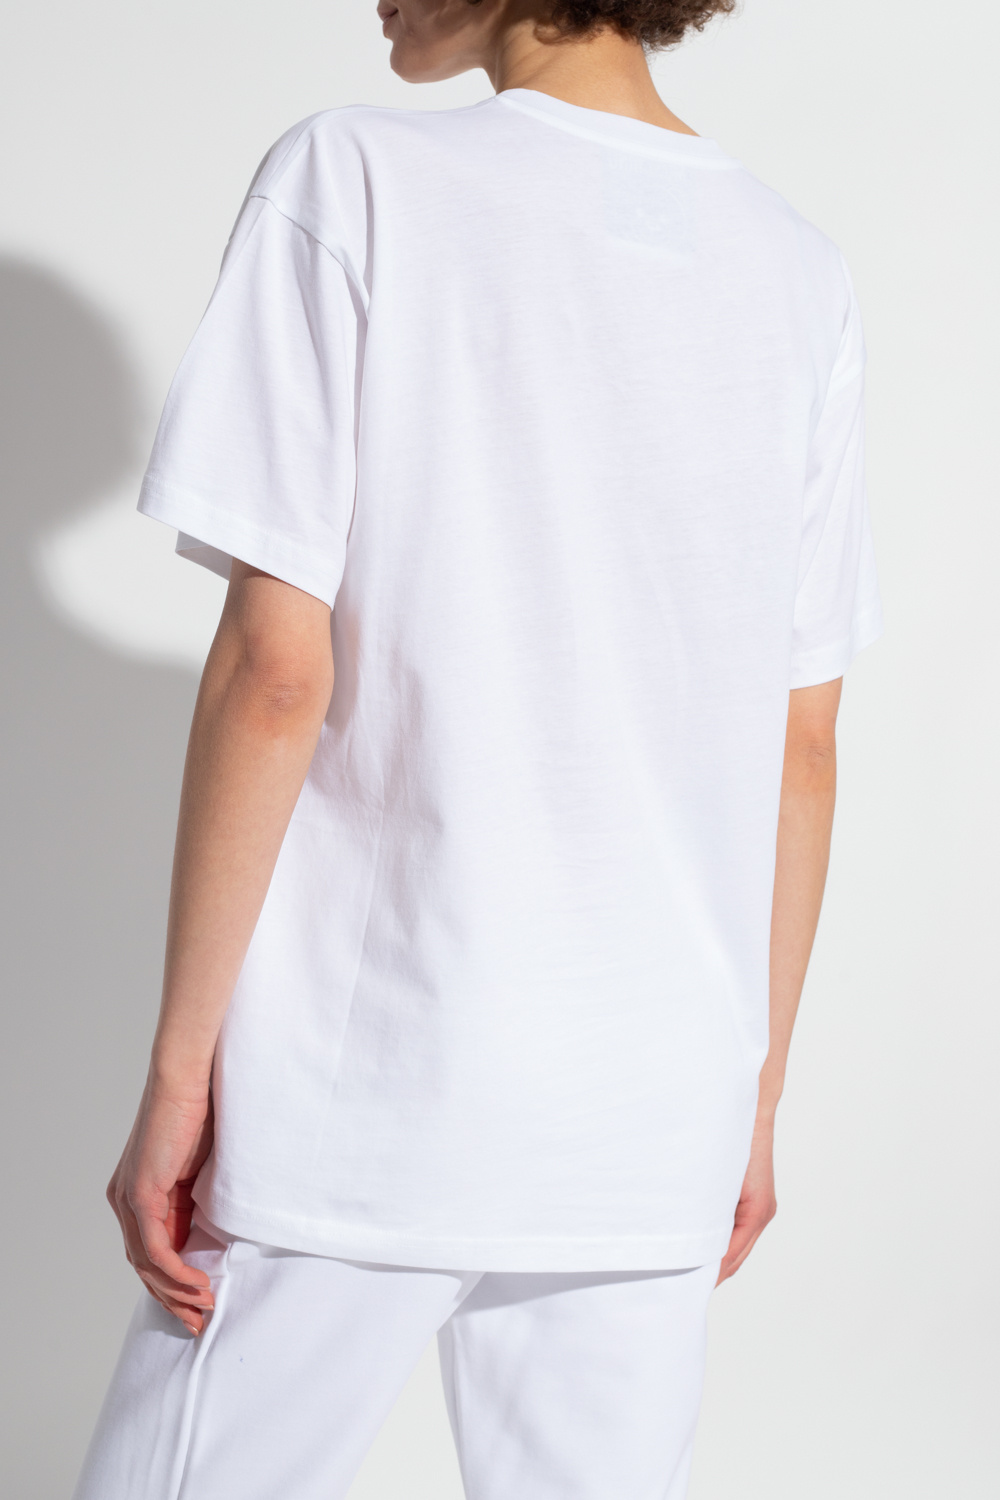 Moschino T-shirt with lightweight